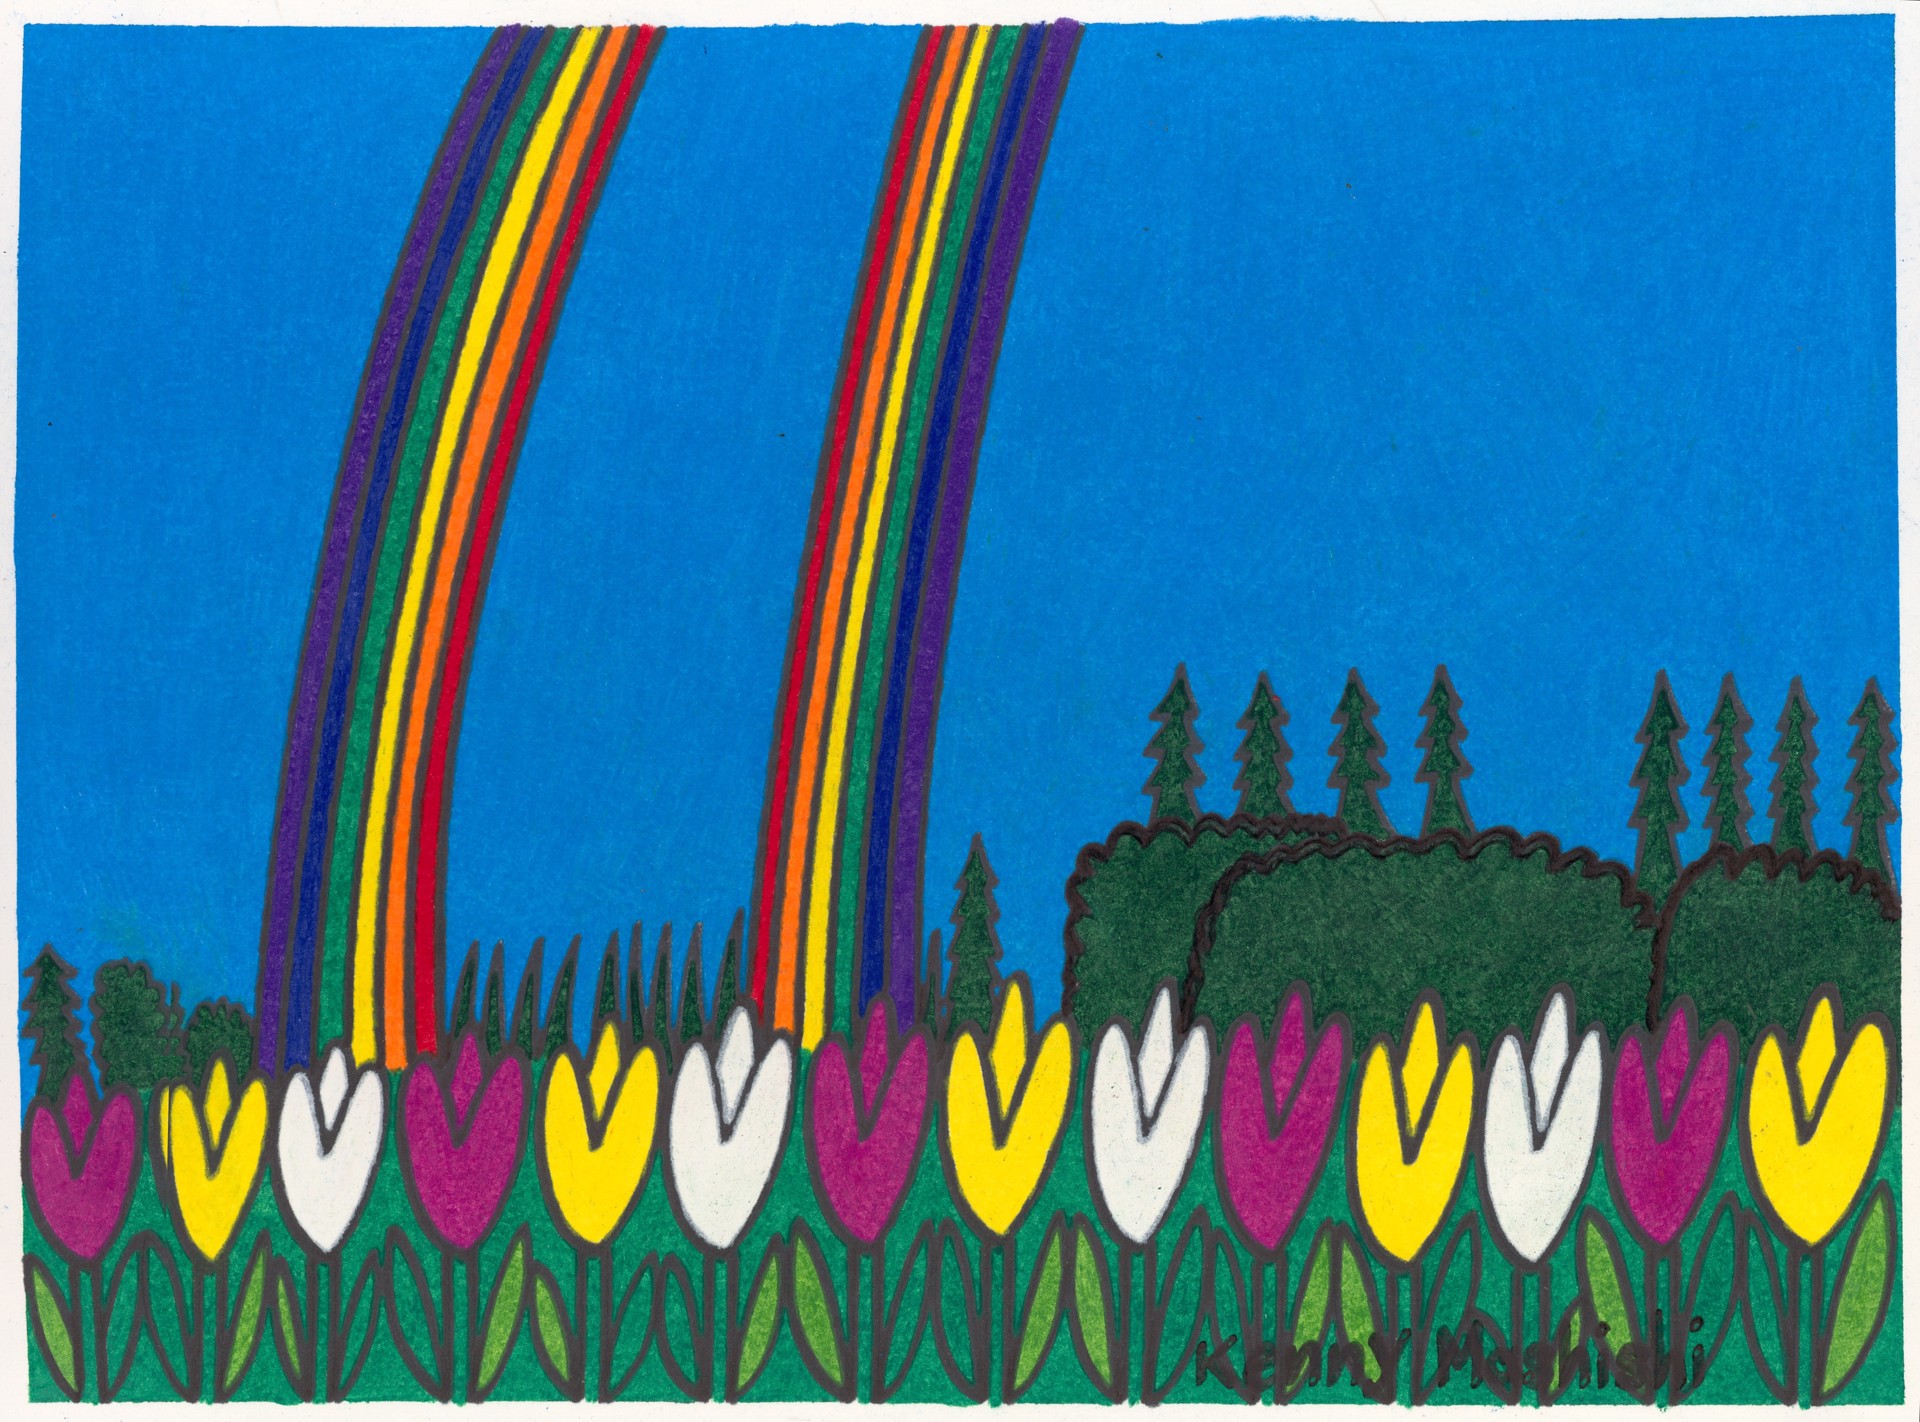 Double Rainbow by Kenny Mashishi